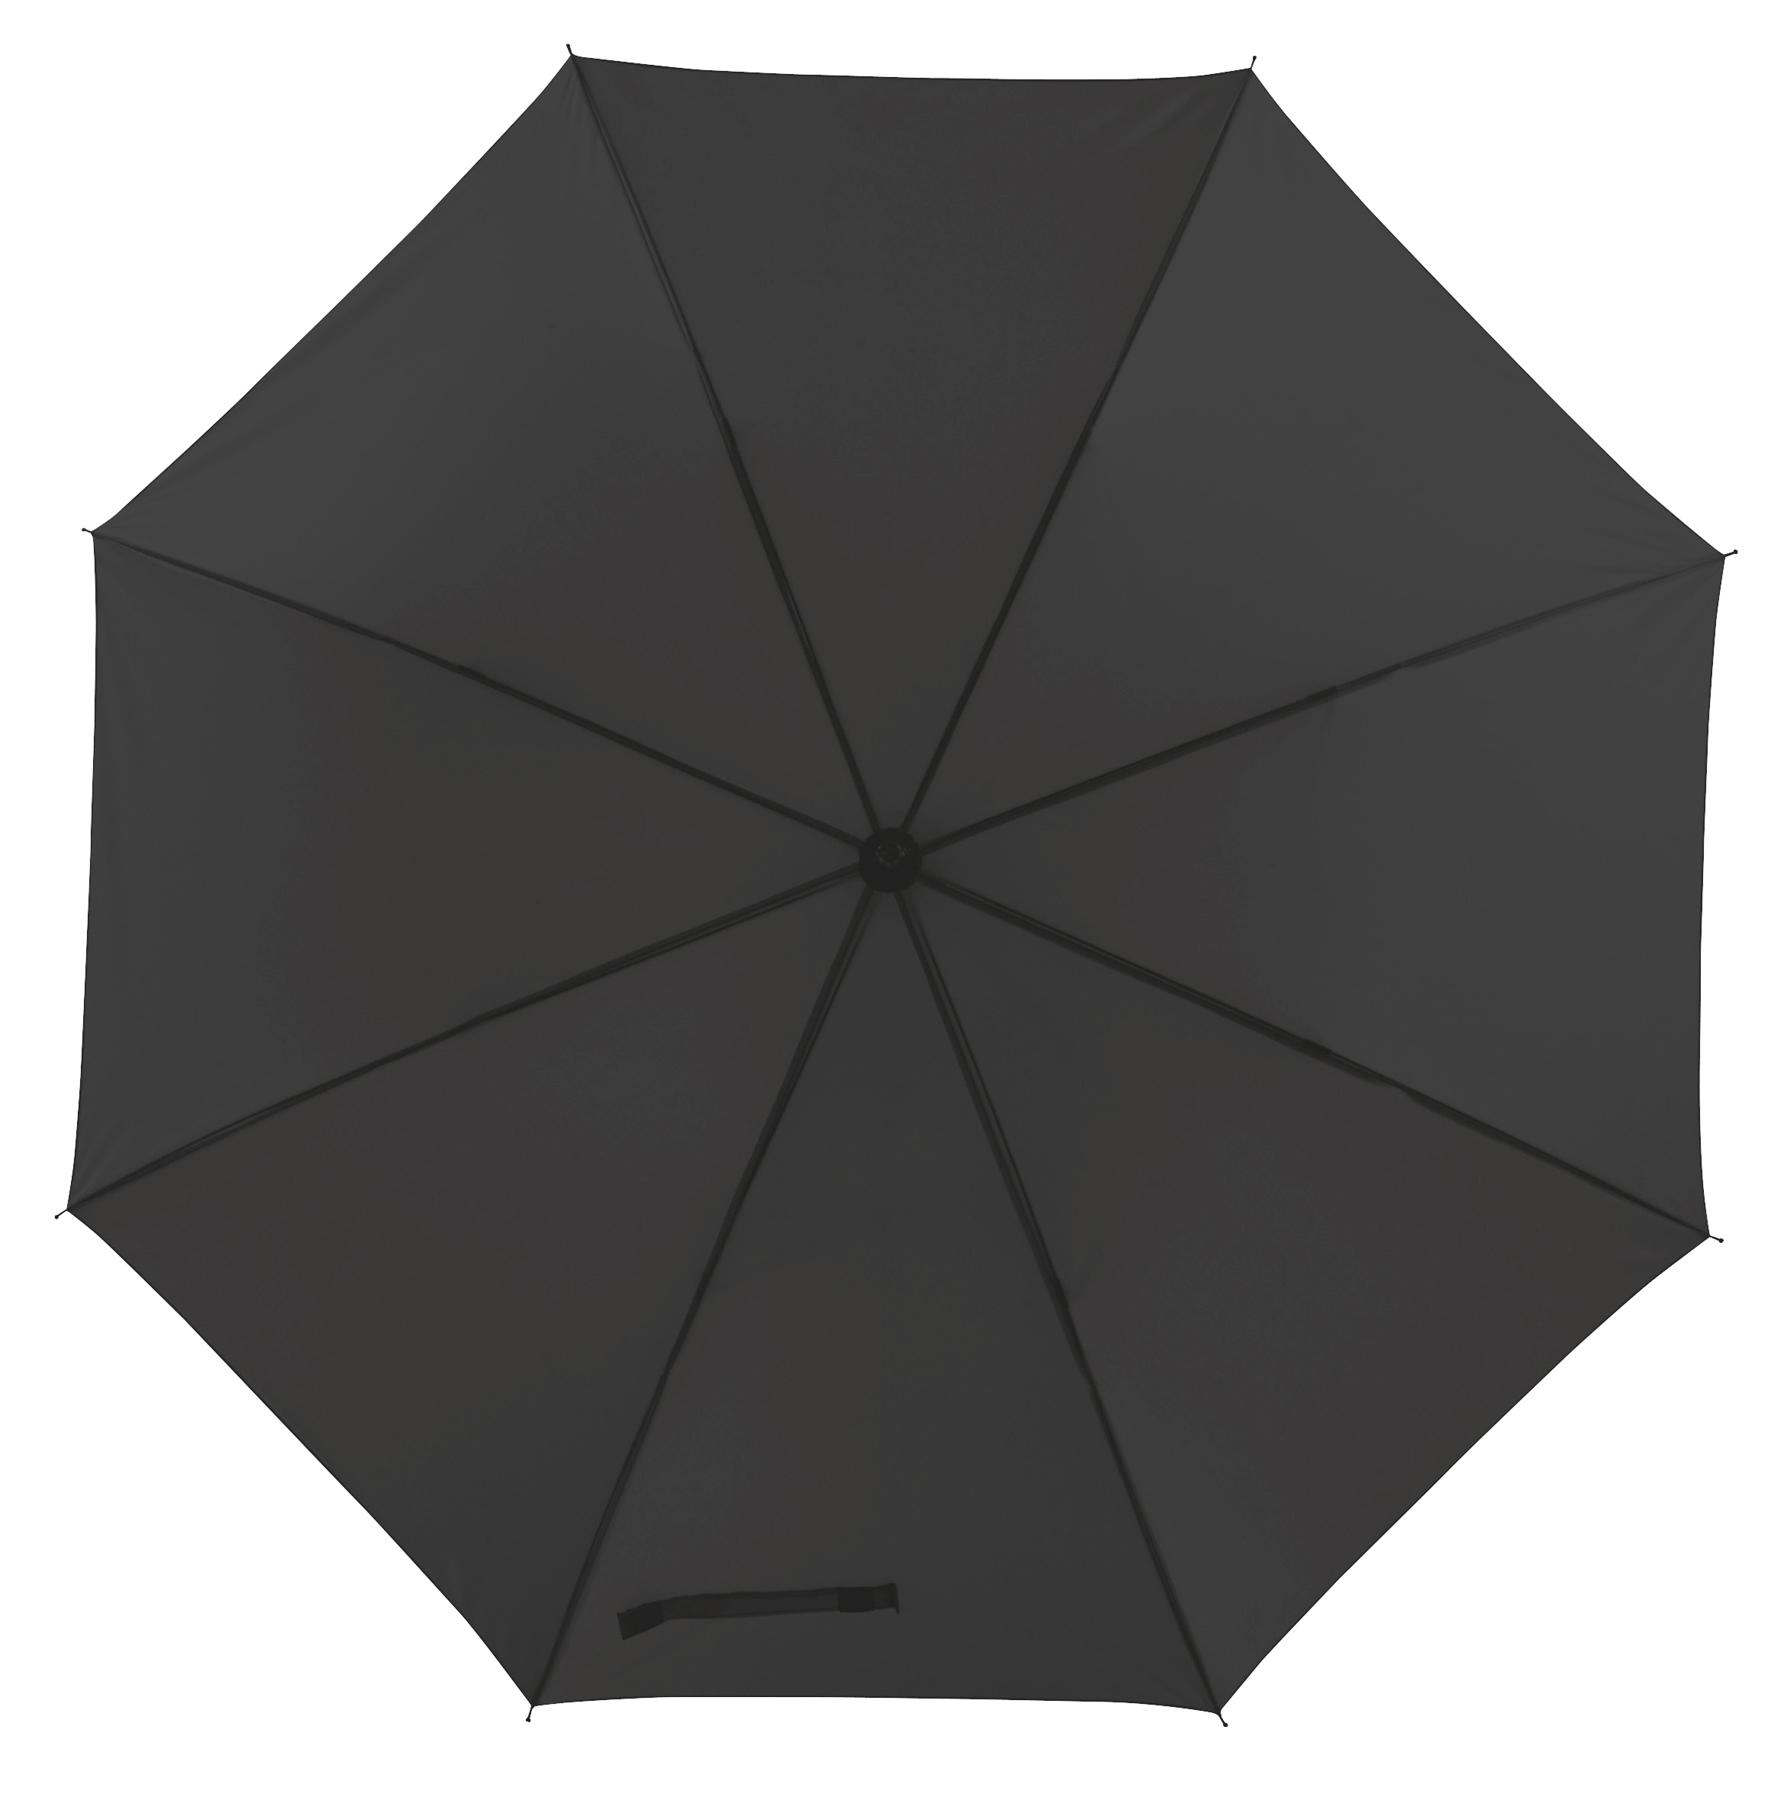 Parasol golf MOBILE, czarny